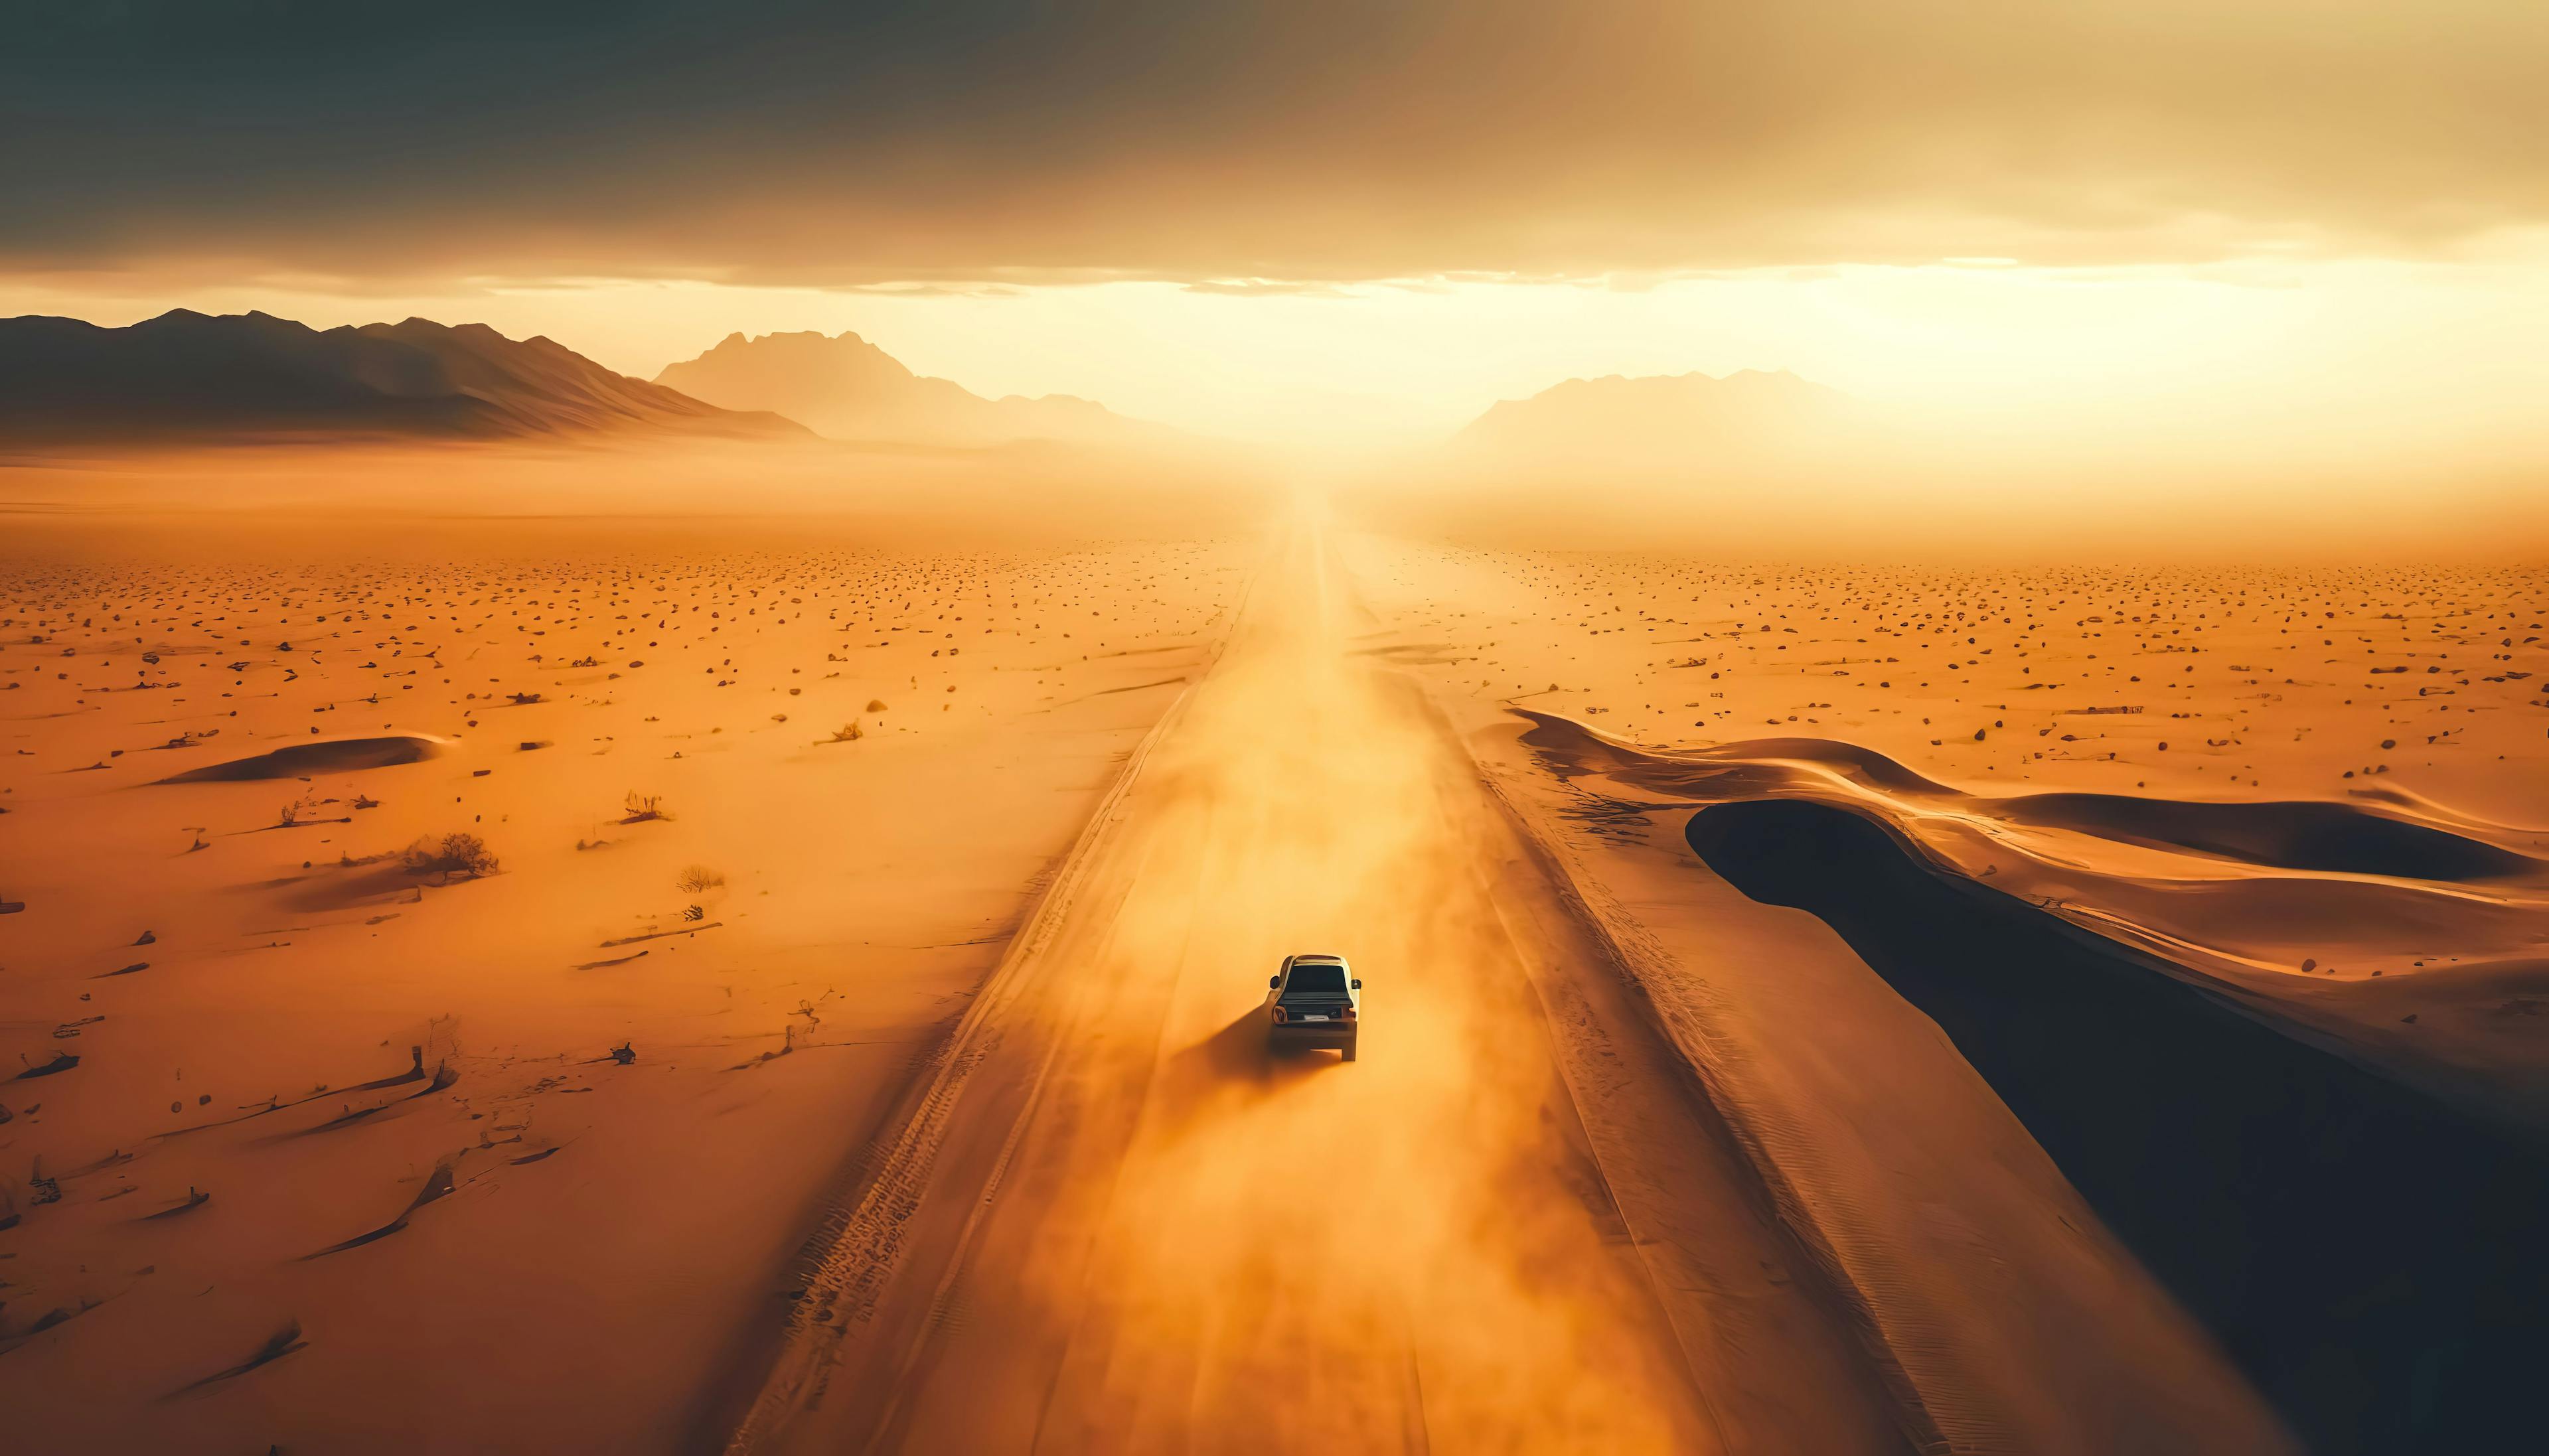 Car traveling through the desert, dusty road under the sun. | Image Credit: © puhimec - stock.adobe.com